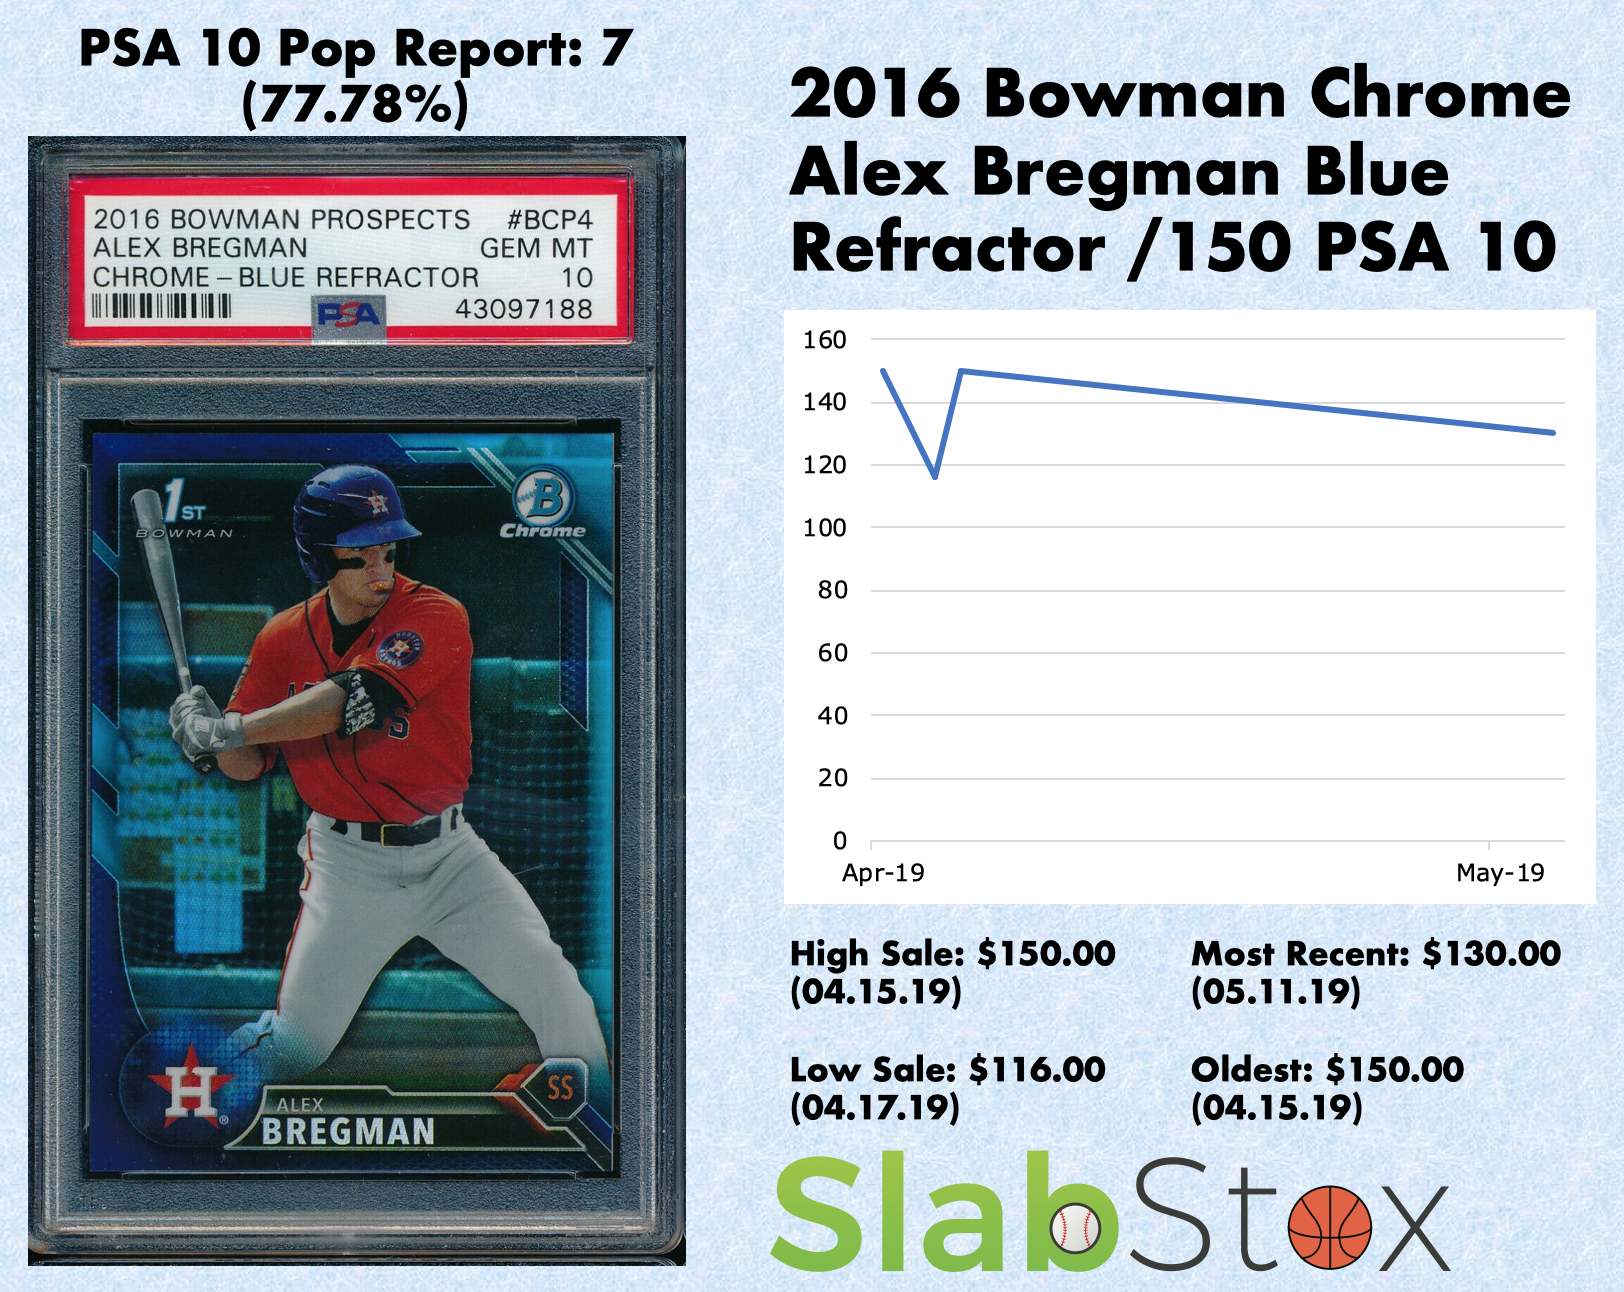 SlabStox infographic for 2016 Bowman Chrome Alex Bregman Blue Refractor /150 PSA 10 sports trading card